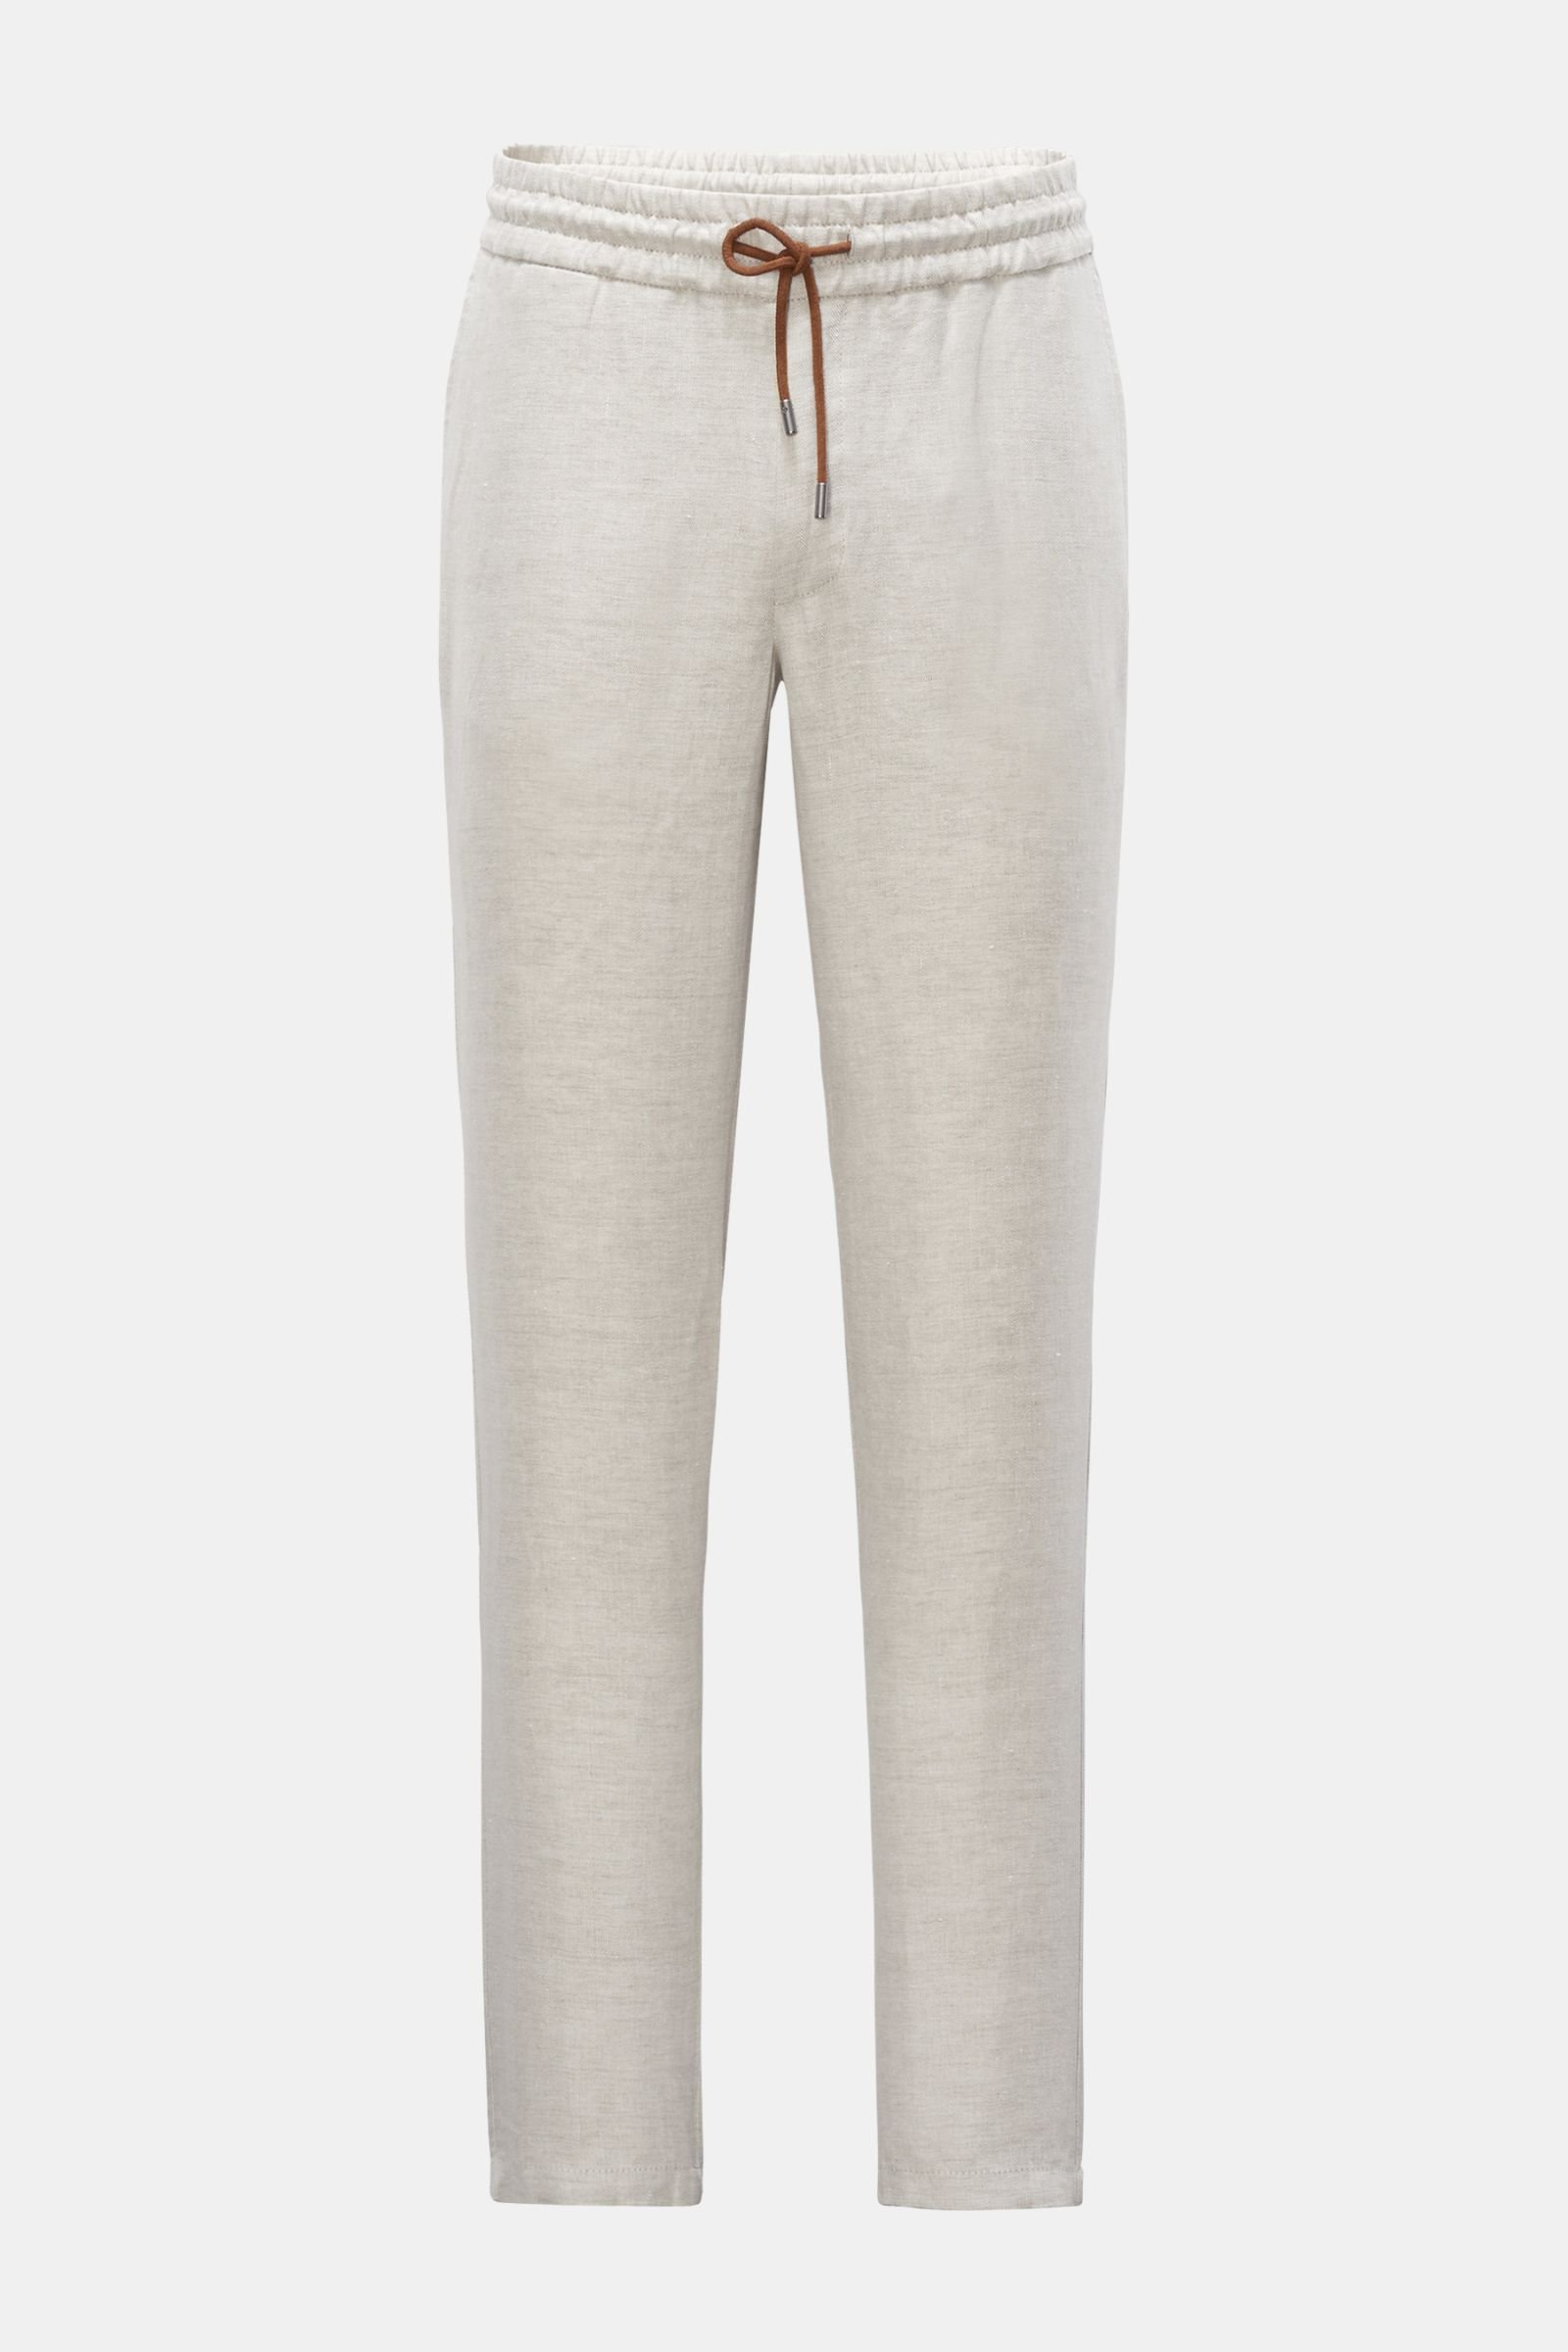 Linen jogger pants light grey